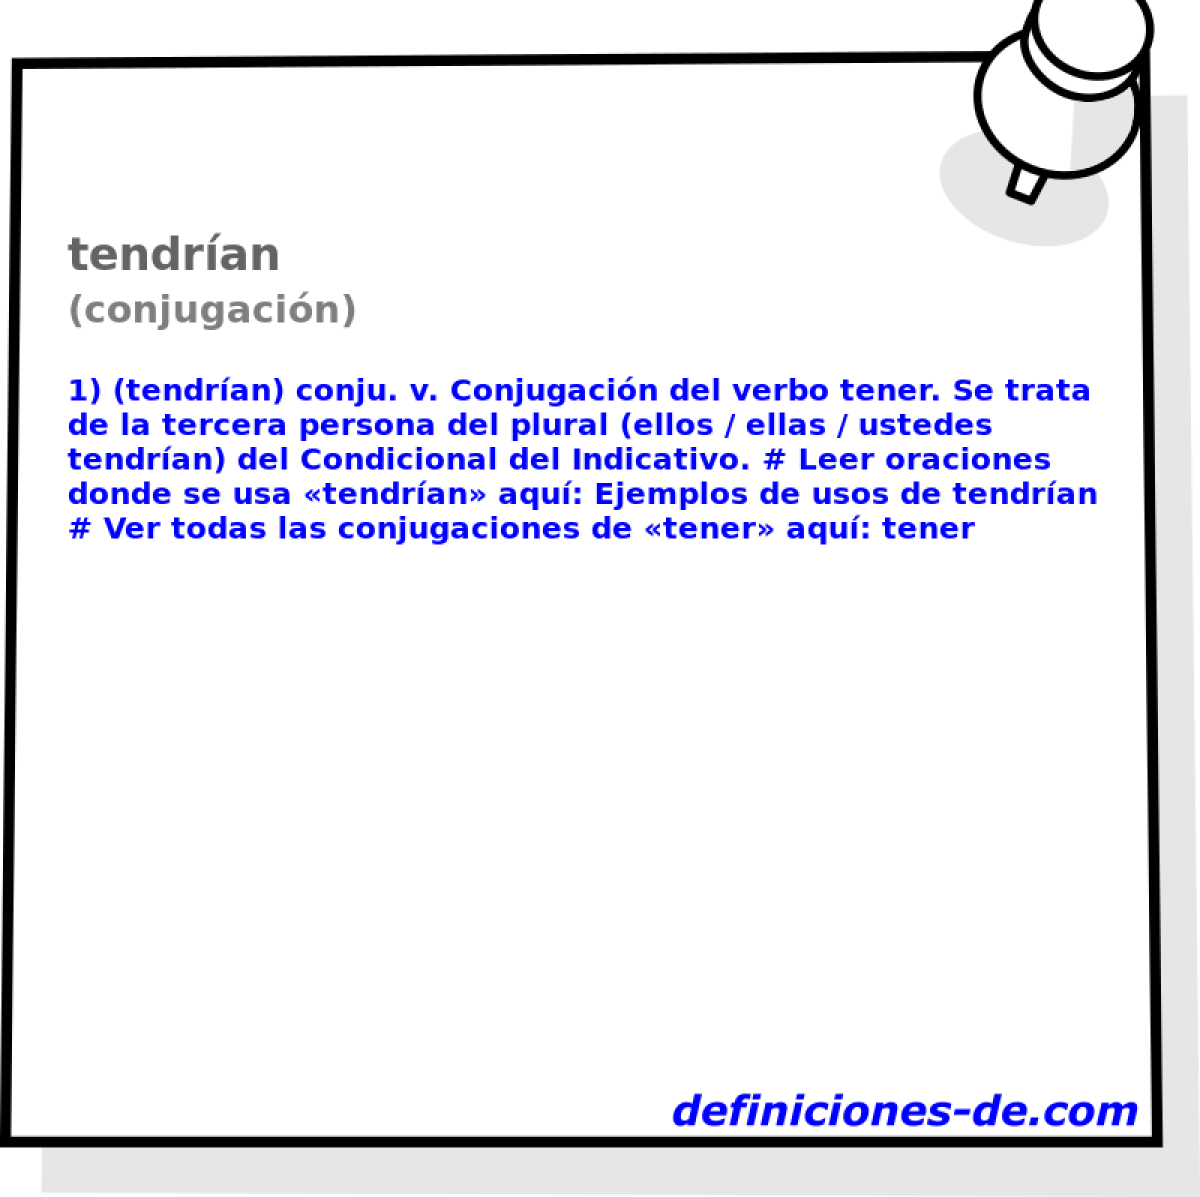 tendran (conjugacin)